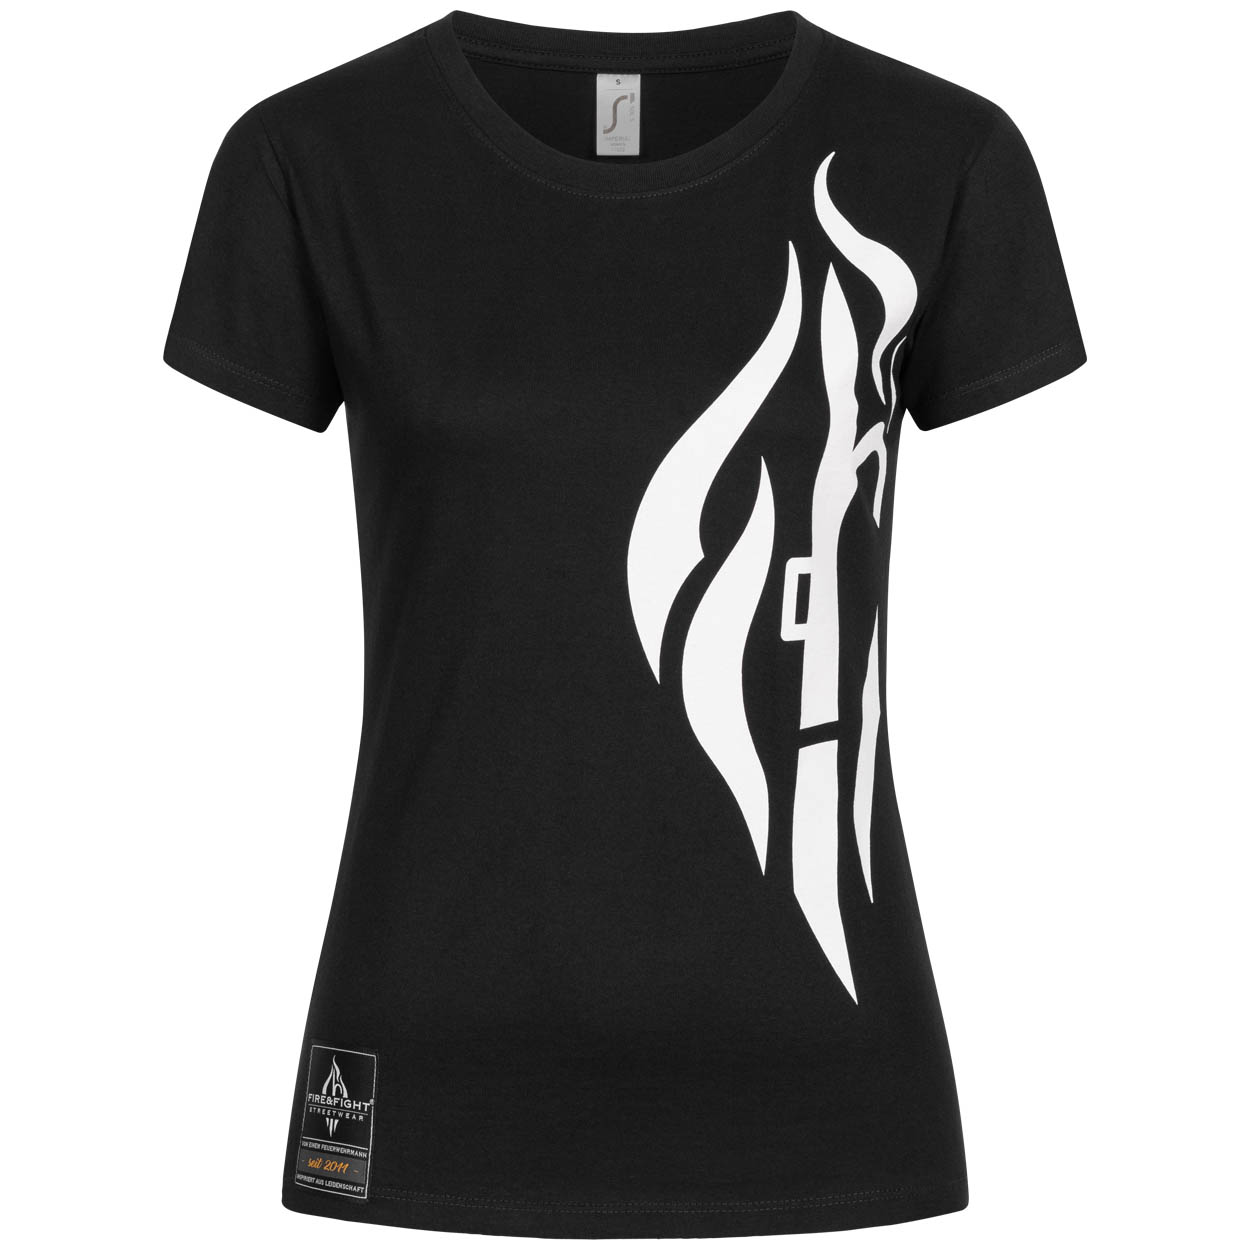 Fire & Hook Feuerwehrfrauen - T-Shirt schwarz